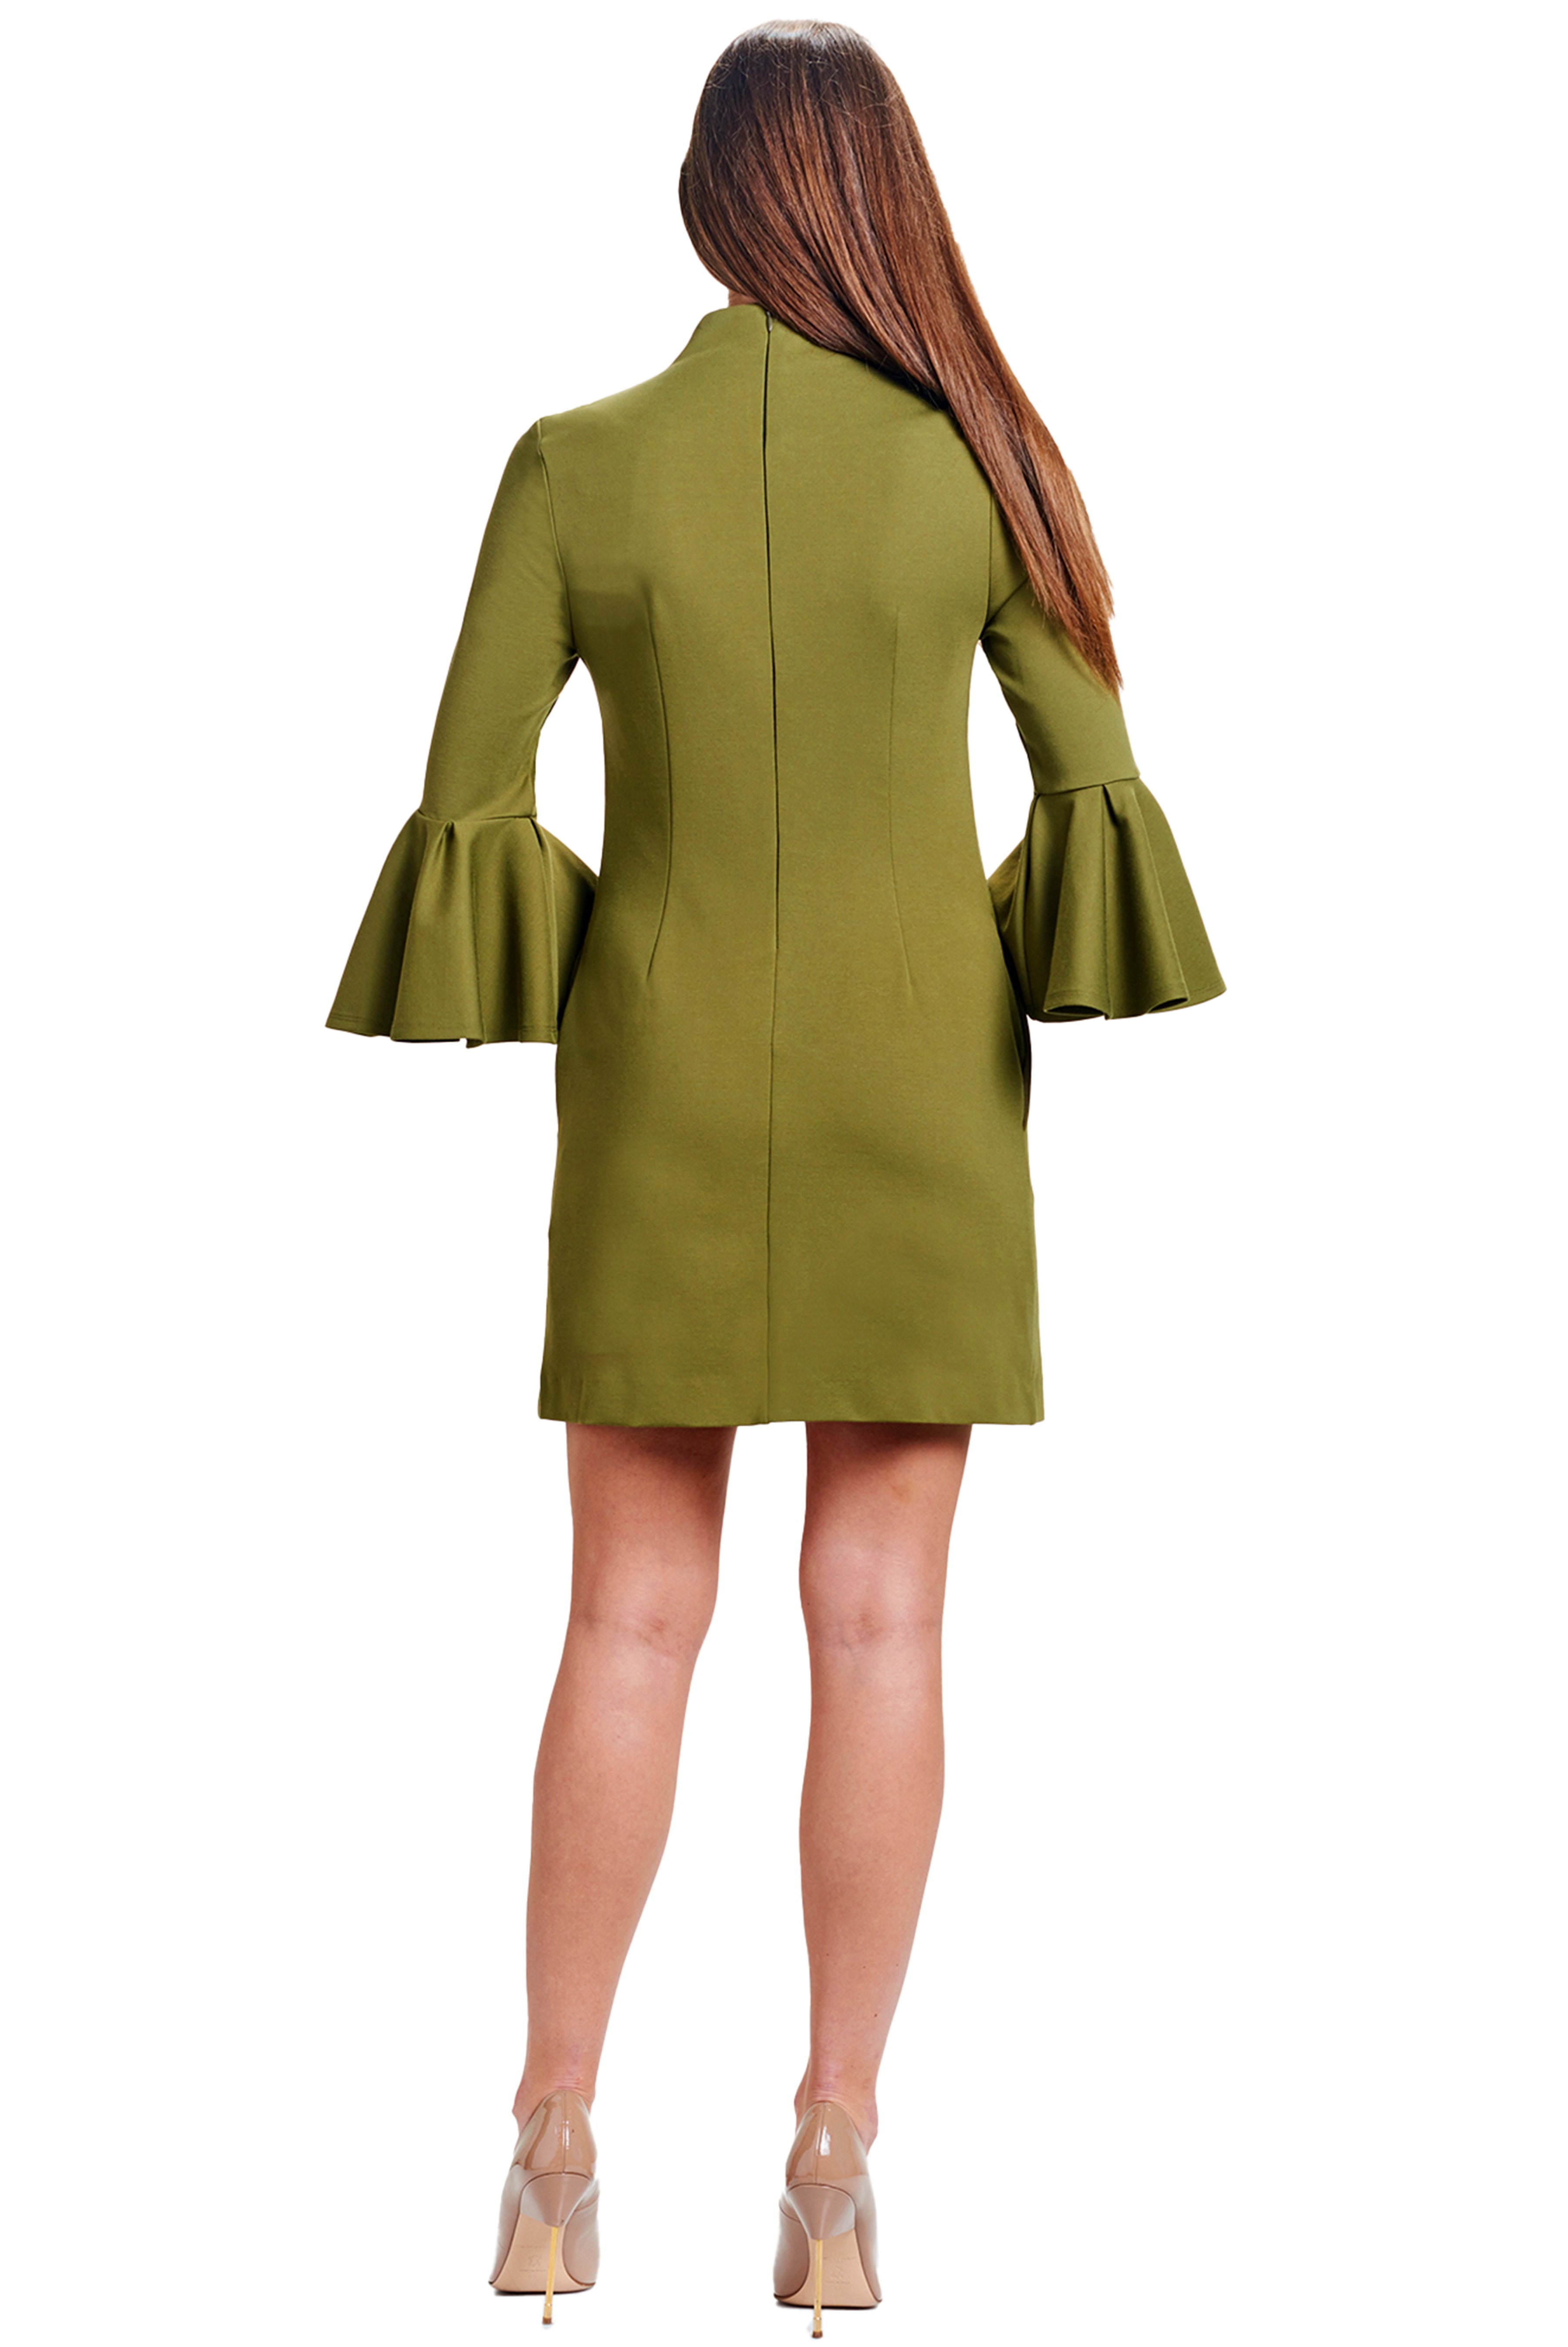 Back view of model wearing olive knit Ponte mini shift dress with v-neckline, 3/4 bell sleeves and side slit pockets.